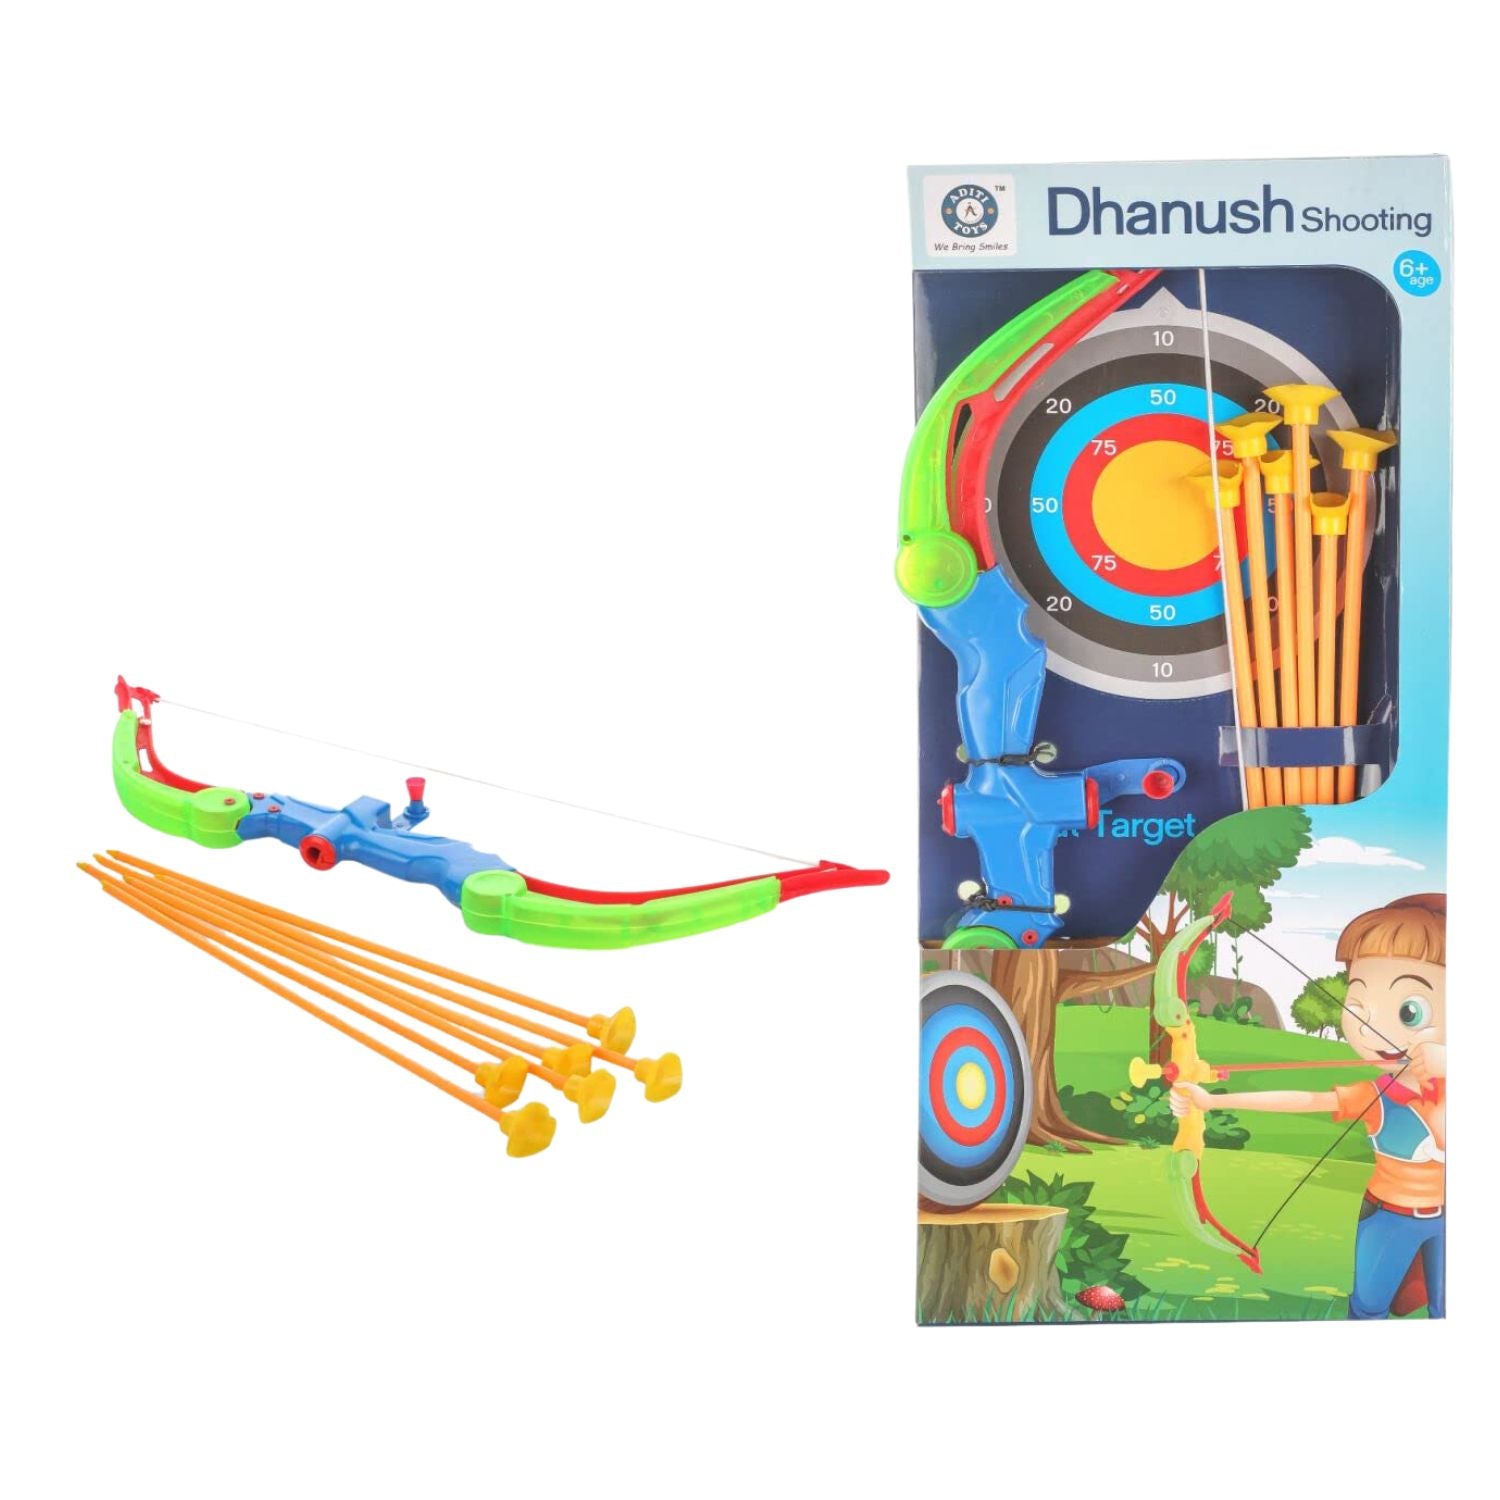 Aditi Dhanush AT69 - LightningBow: Bow and Arrow Toy Set, Child-Safe Plastic, Illuminated Bow, Elastic Tension Wire, Set of 3 Arrows